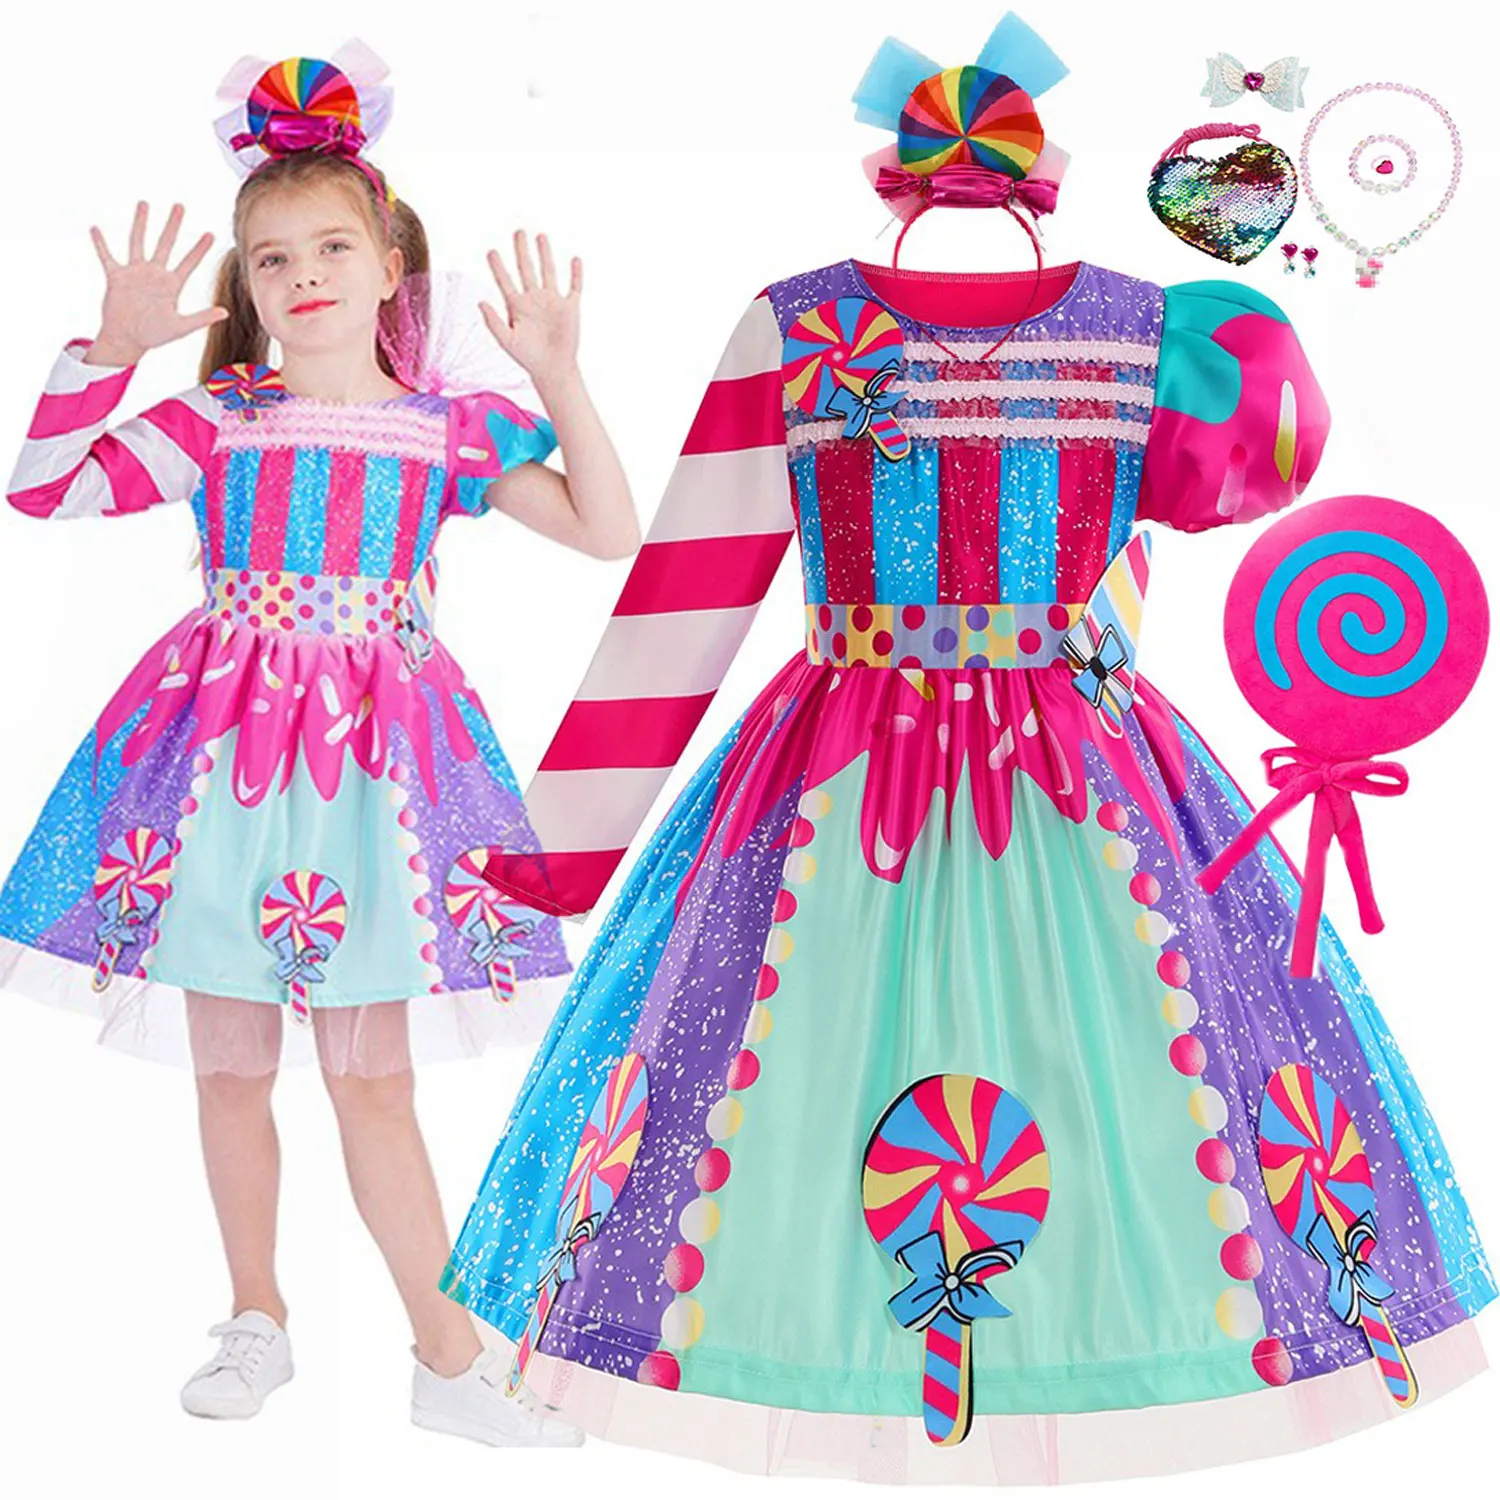 

Sweet Lollipop Candy Kids Dress Carnival Party Little Girl Birthday Costume Fancy Rainbow Tutu Children Wedding Clothes 2-8T